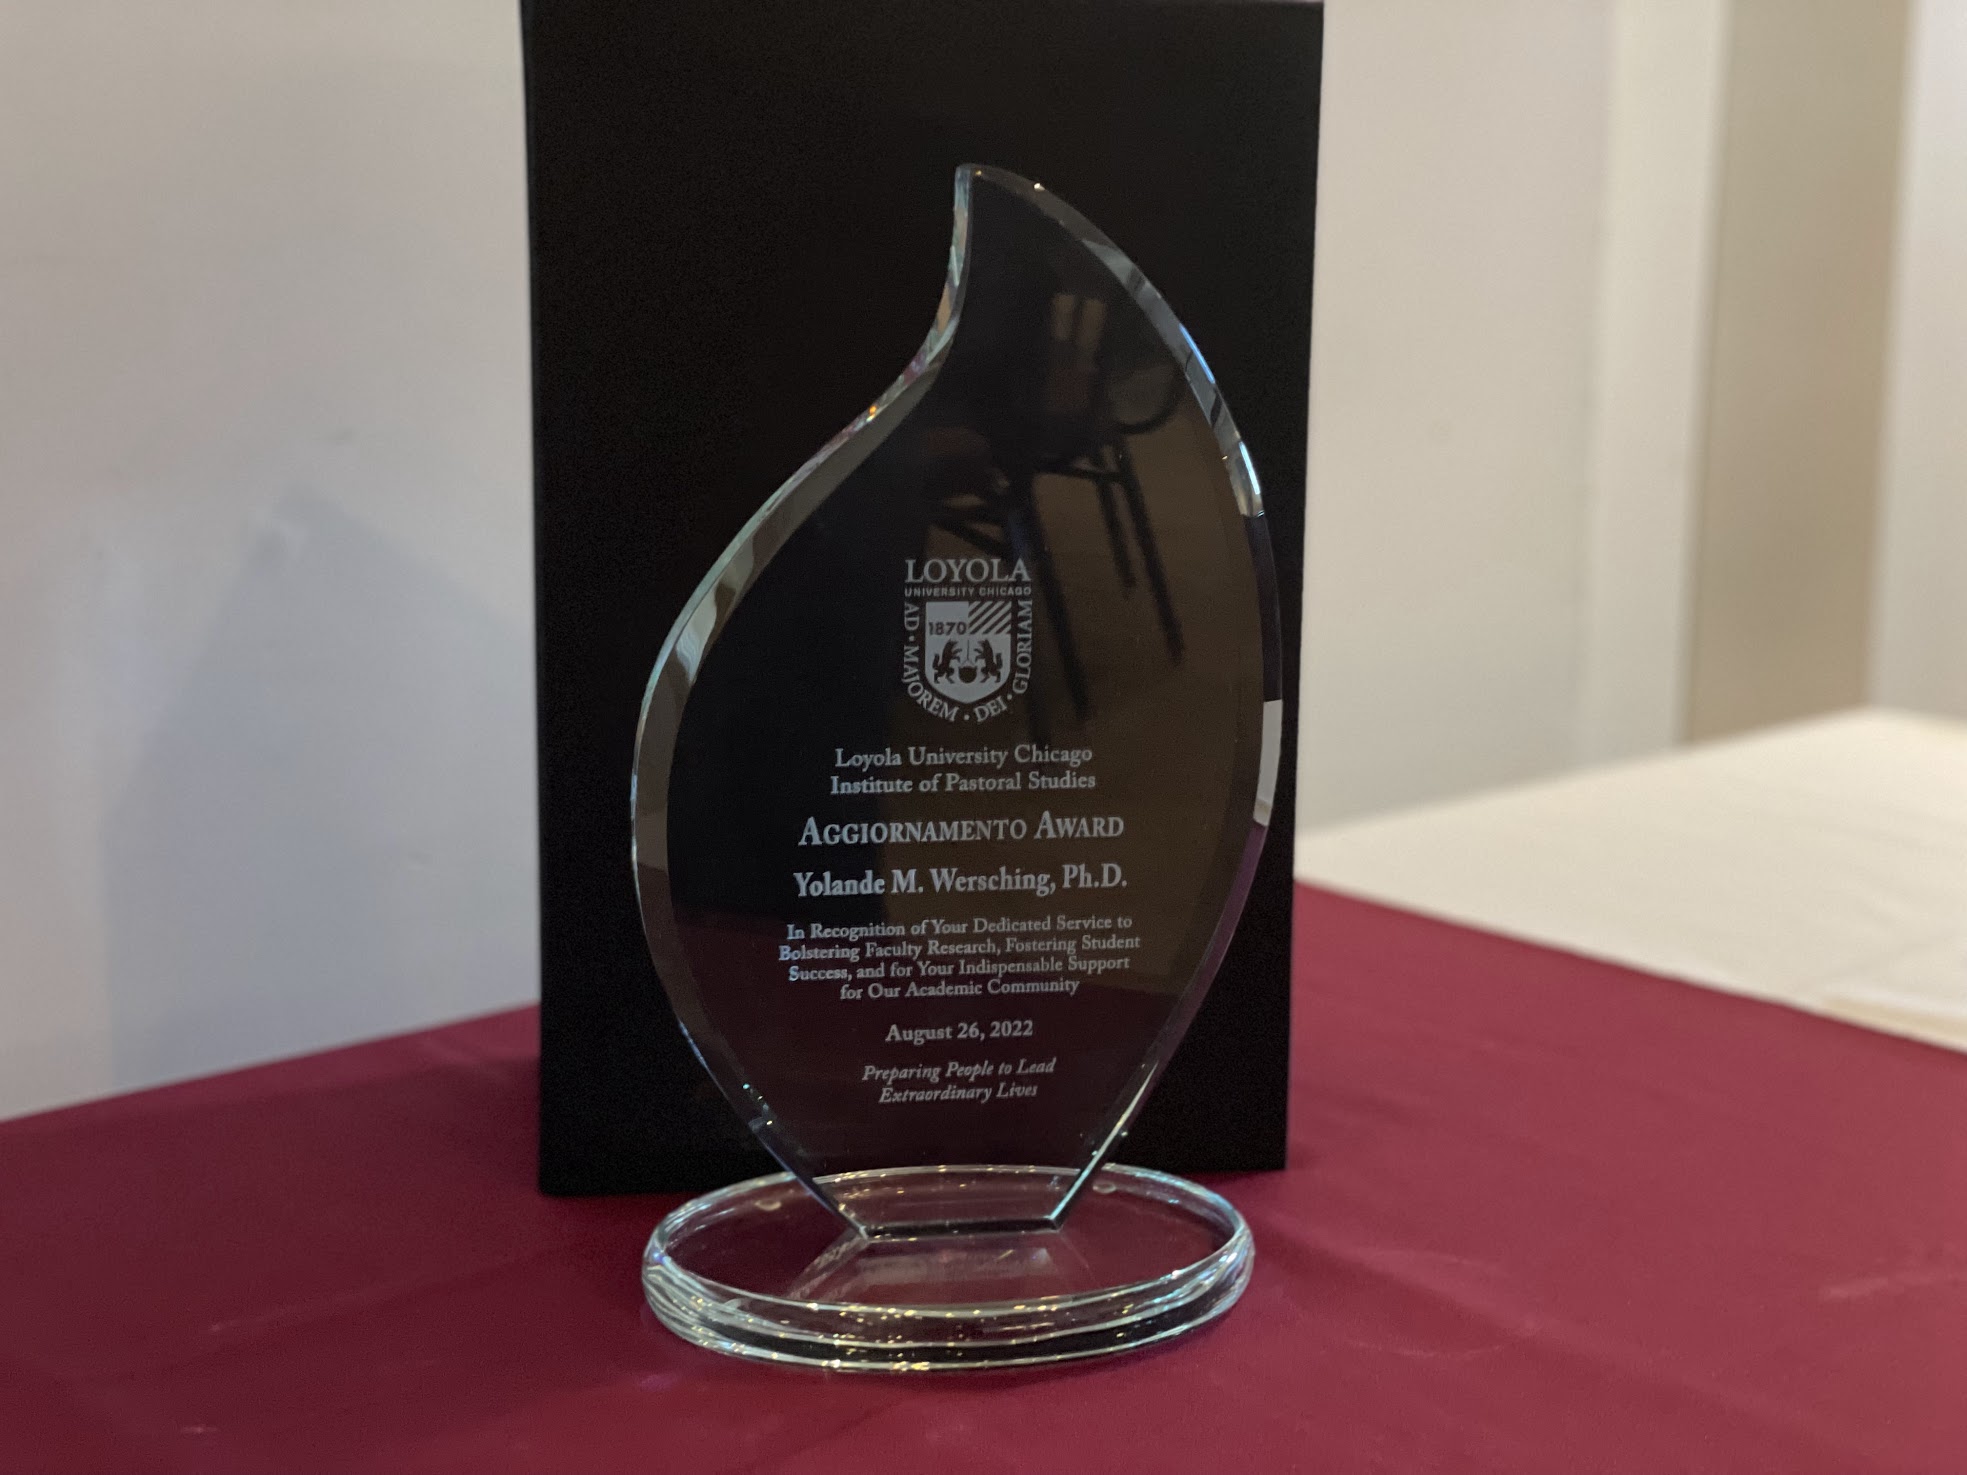 IPS Aggiornamento Award / 2022